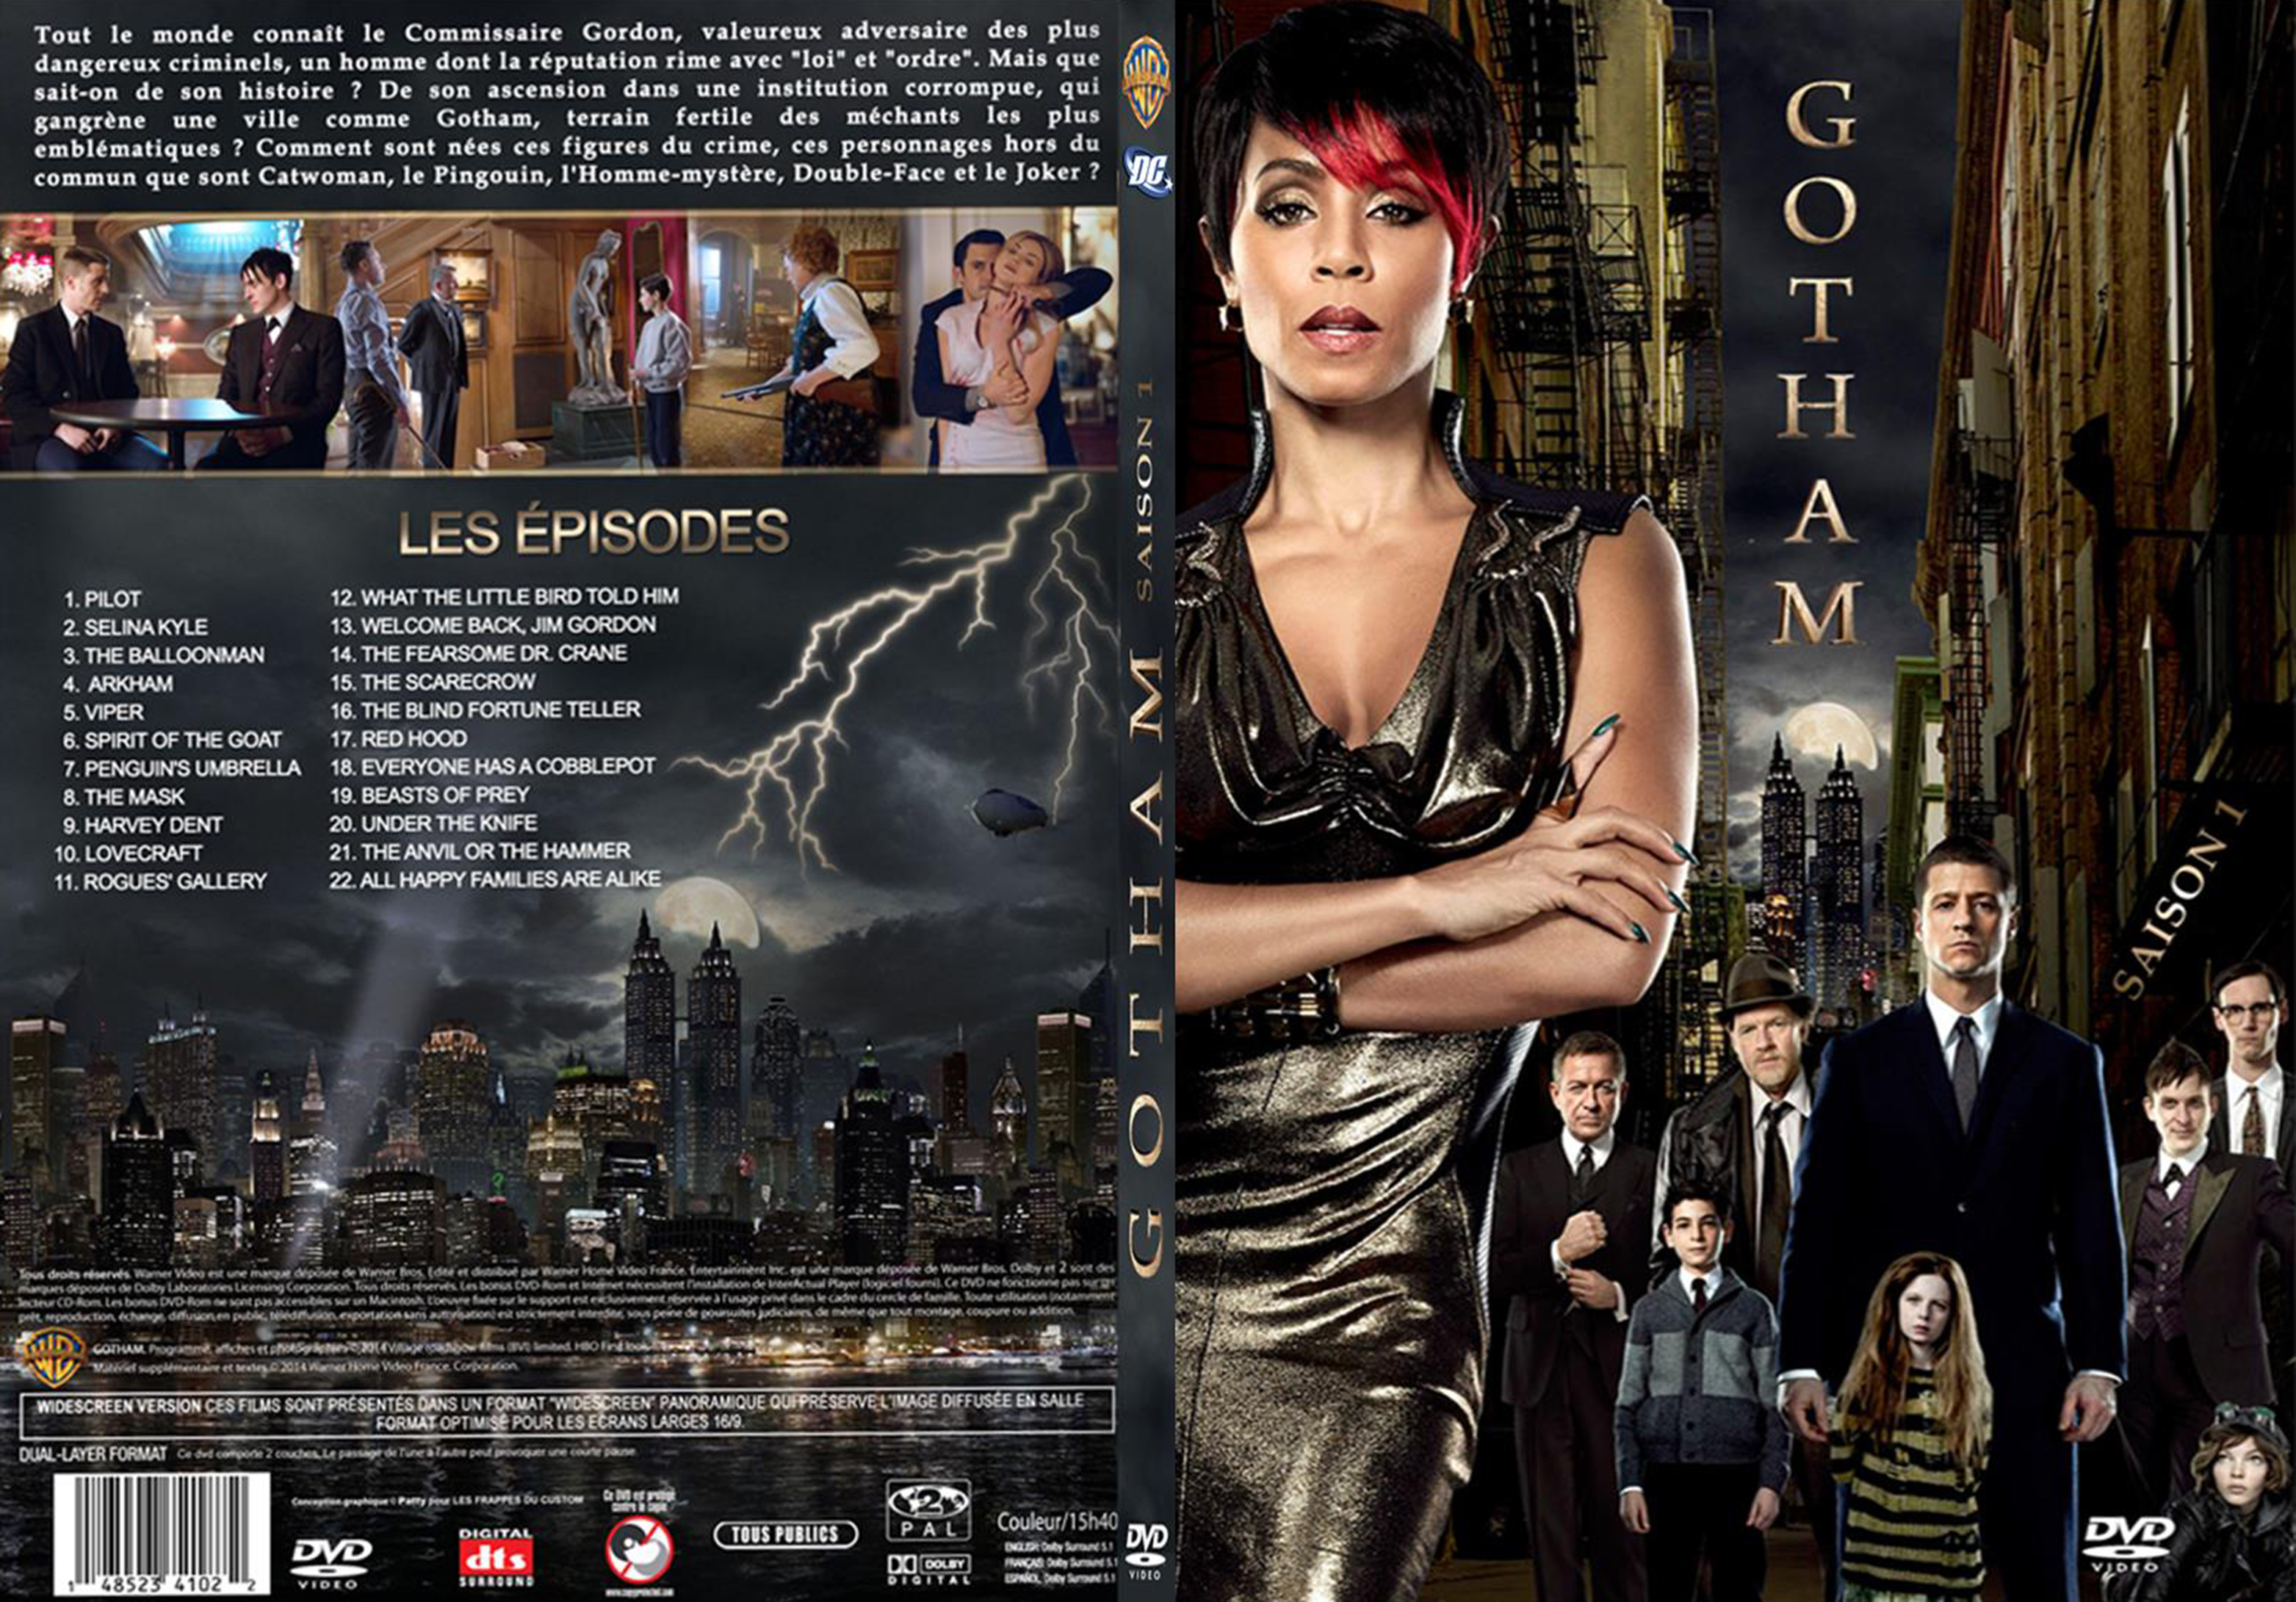 Jaquette DVD Gotham Saison 1 custom